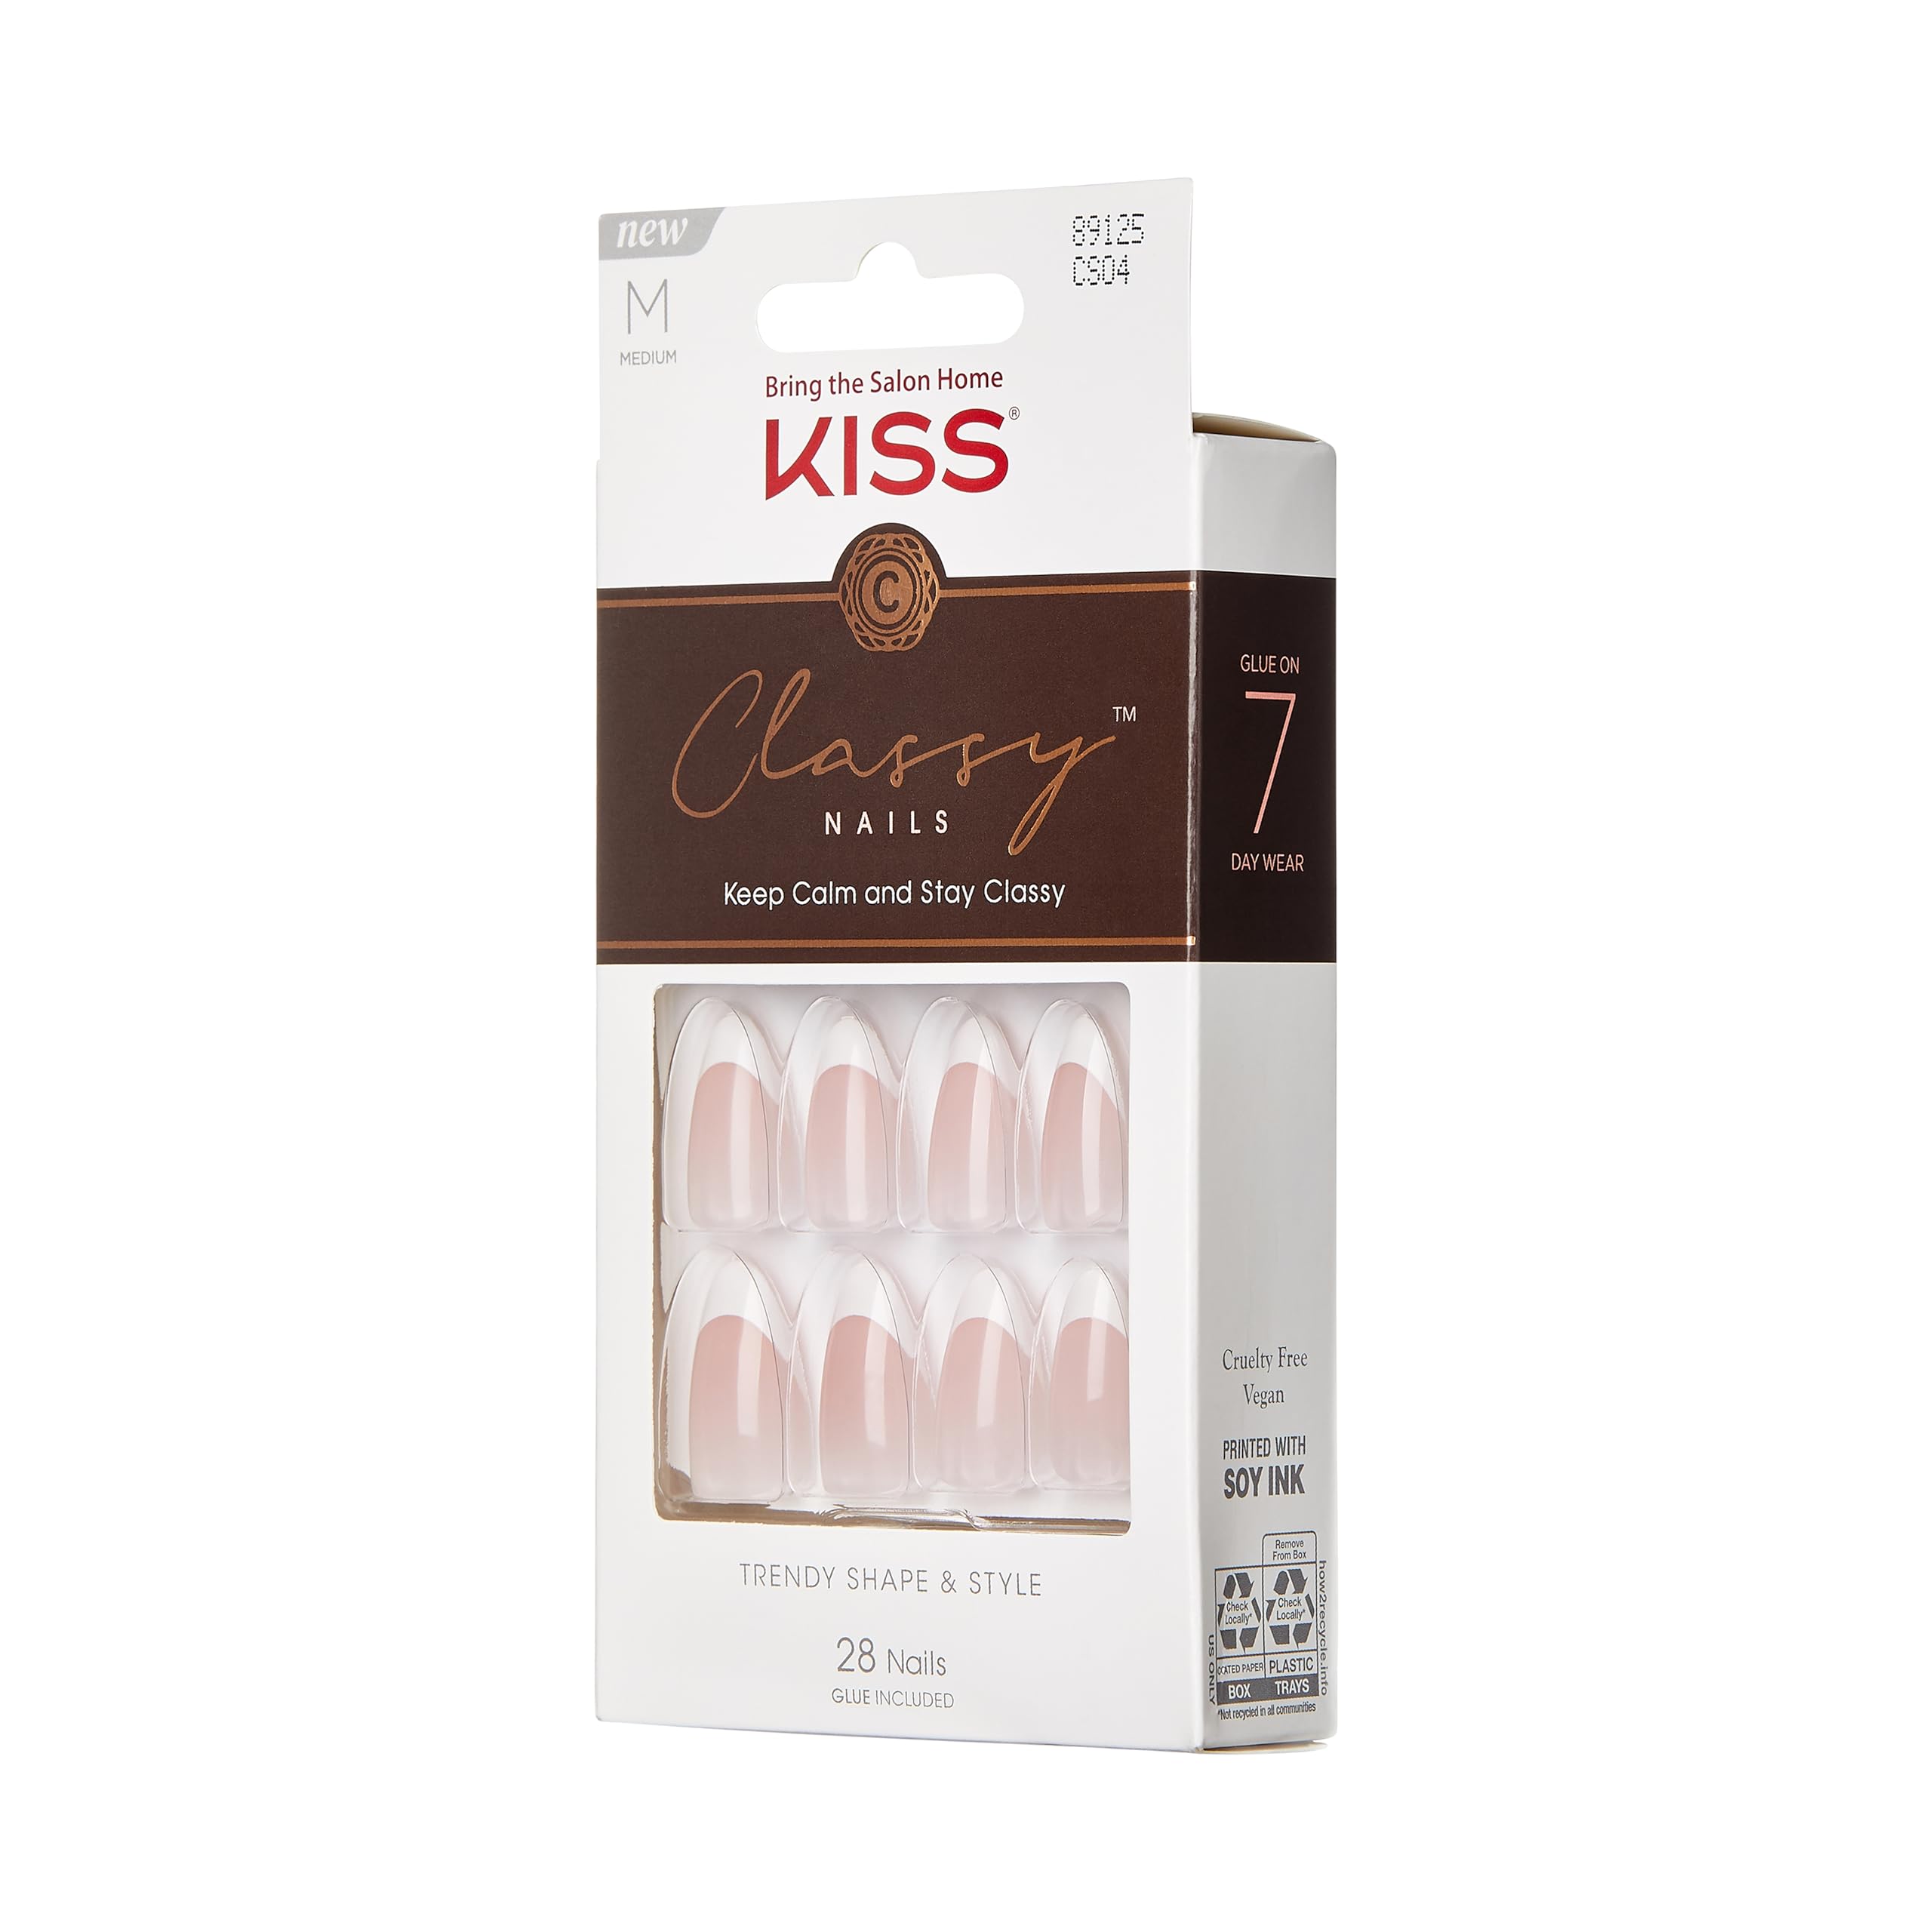 KISS Classy Press On Nails, Nail glue included, Dashing', Light White, Medium Size, Almond Shape, Includes 28 Nails, 2g glue, 1 Manicure Stick, 1 Mini File